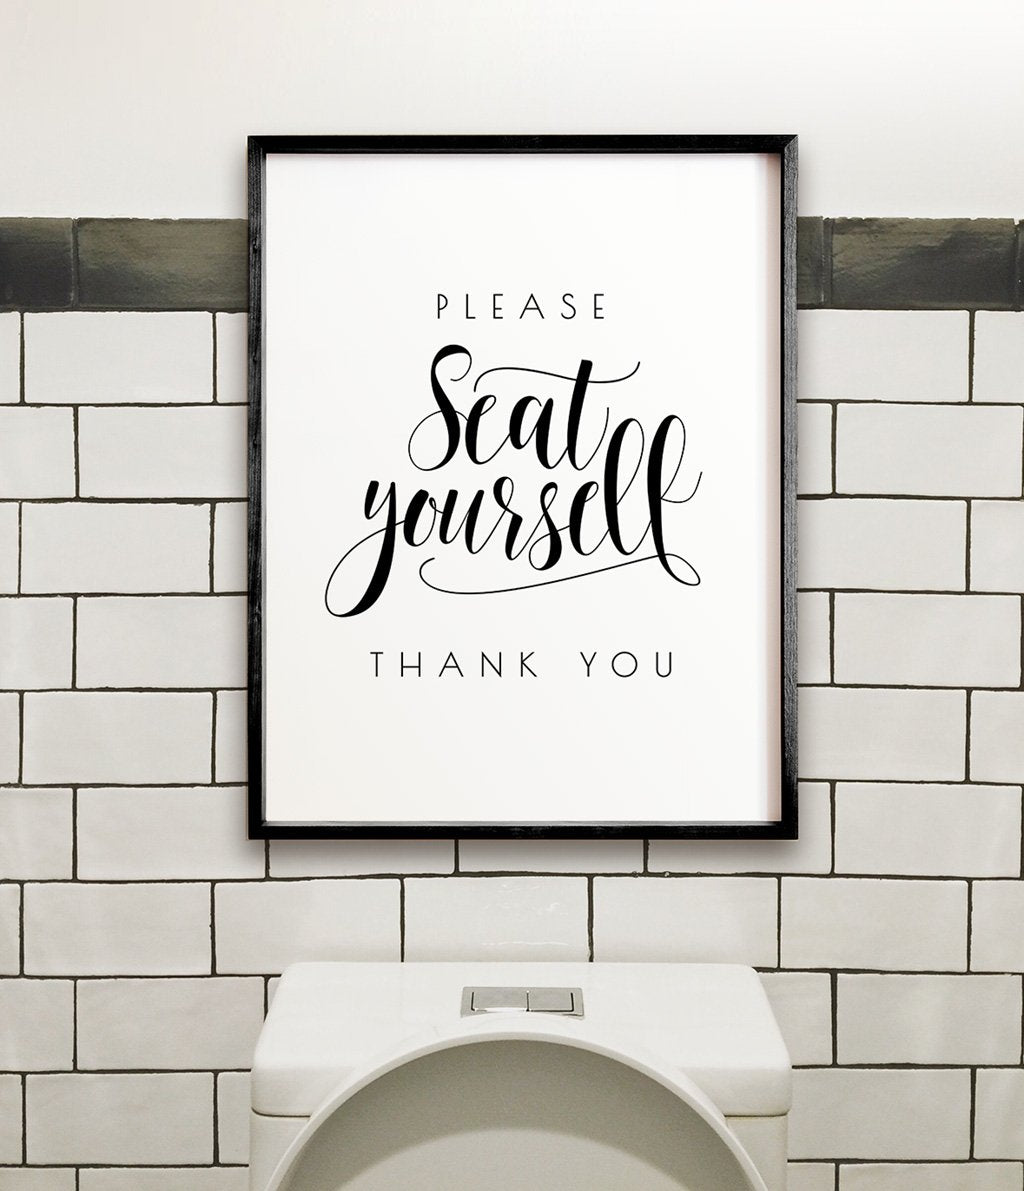 Please Seat Yourself Bathroom Print - The Crown Prints